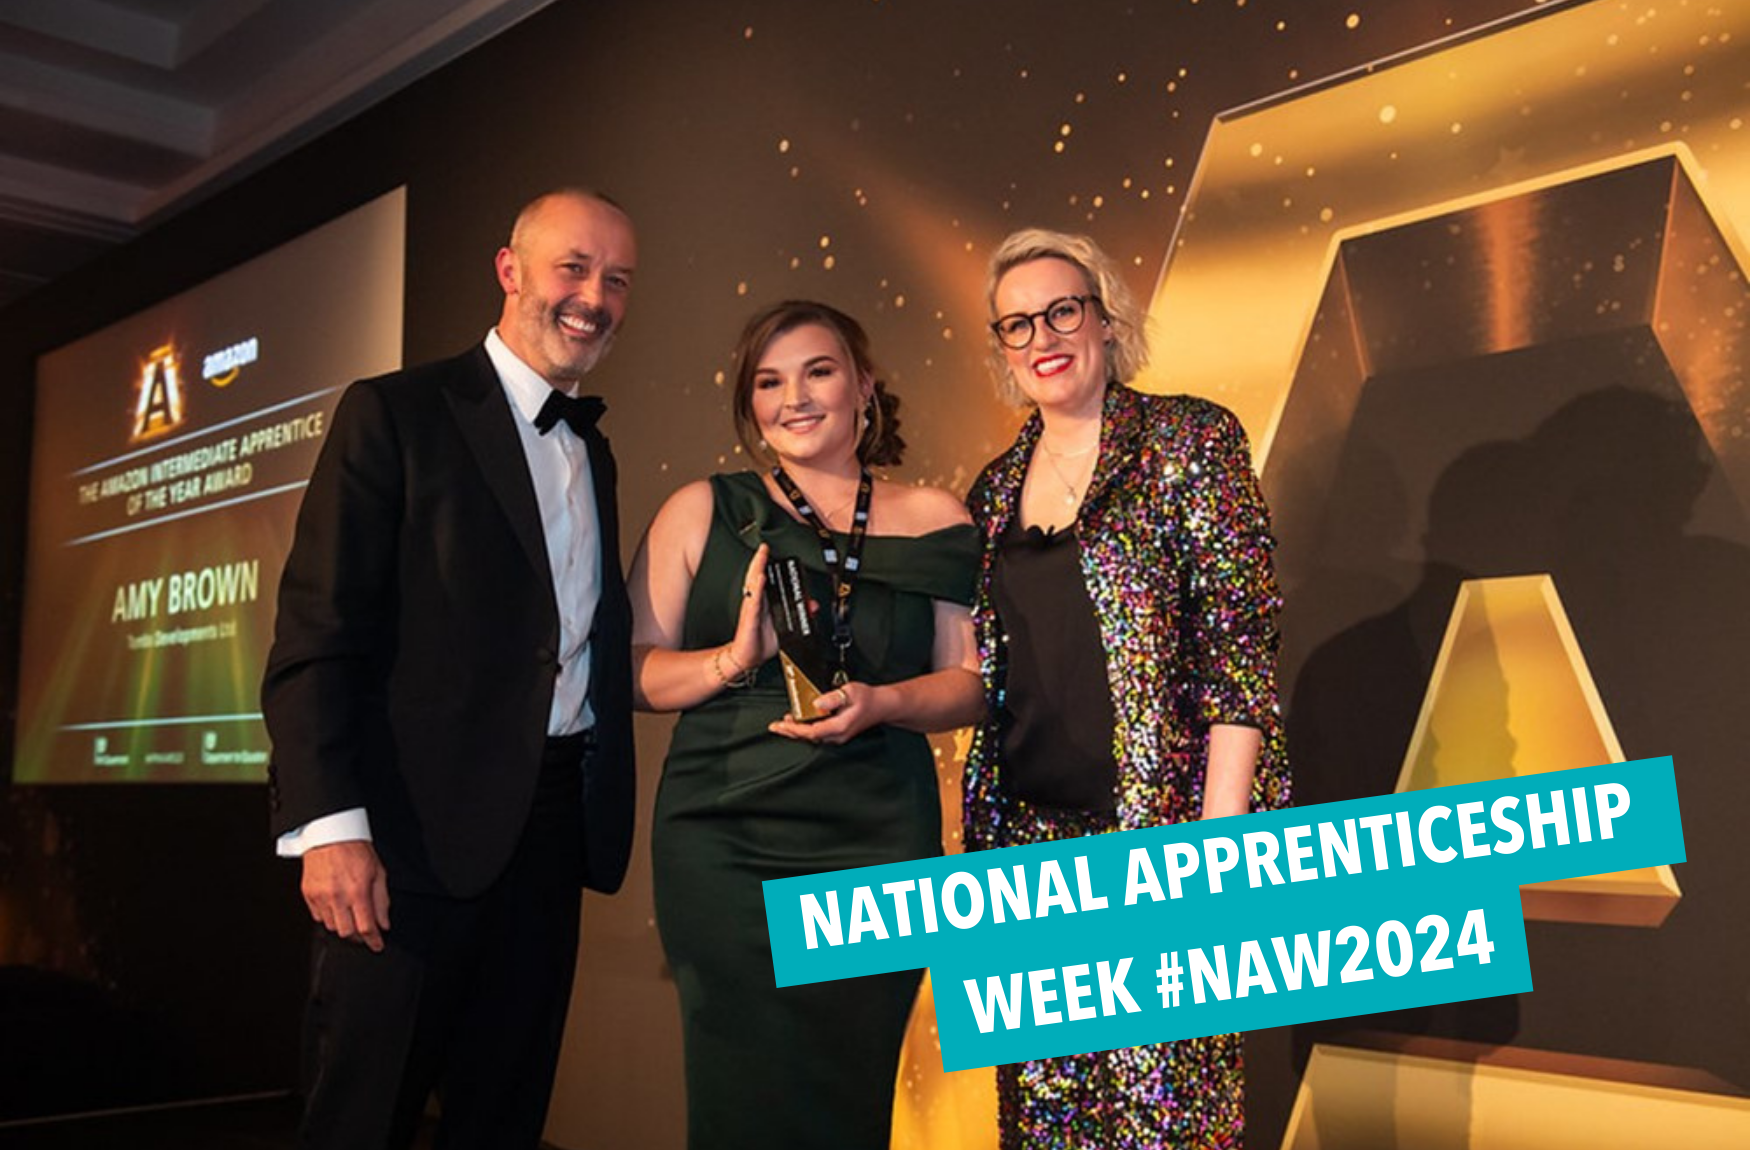 Gloucestershire College apprentice wins National Apprenticeship Award